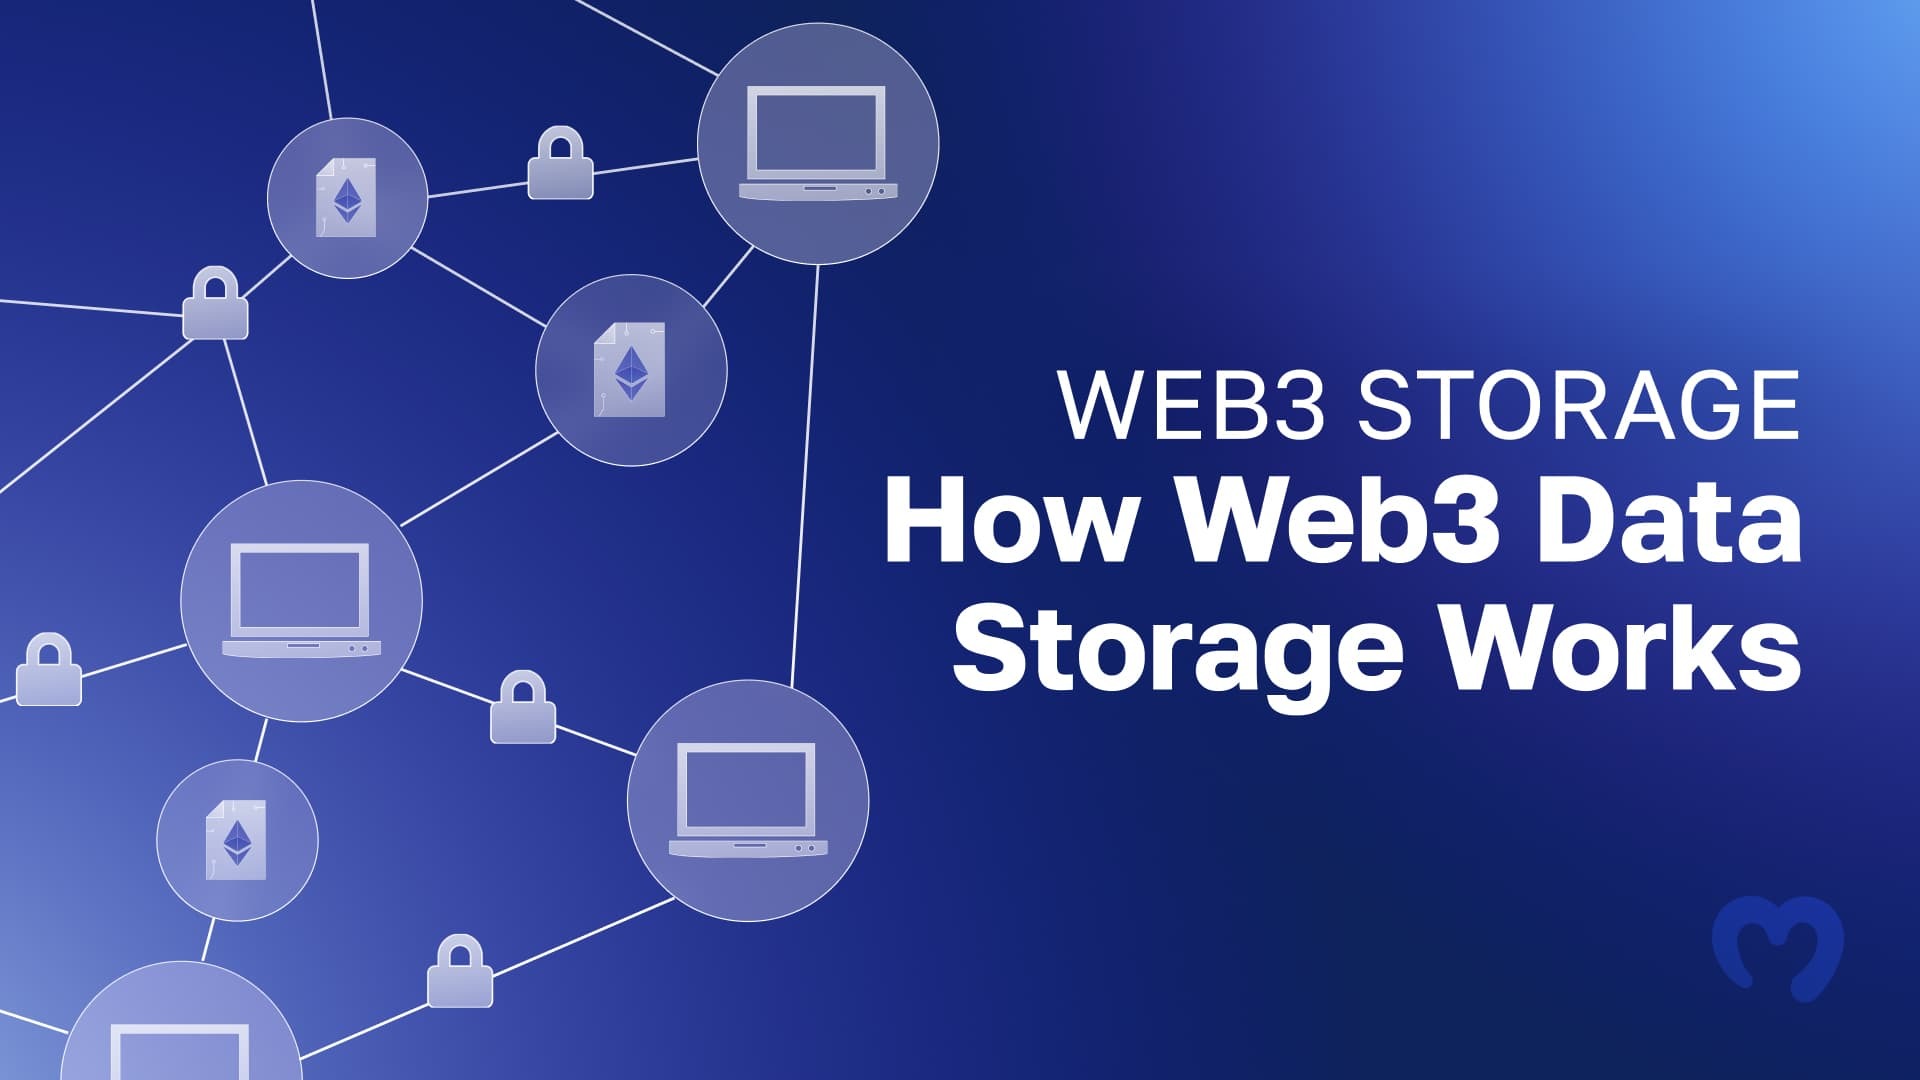 Web3 data storage